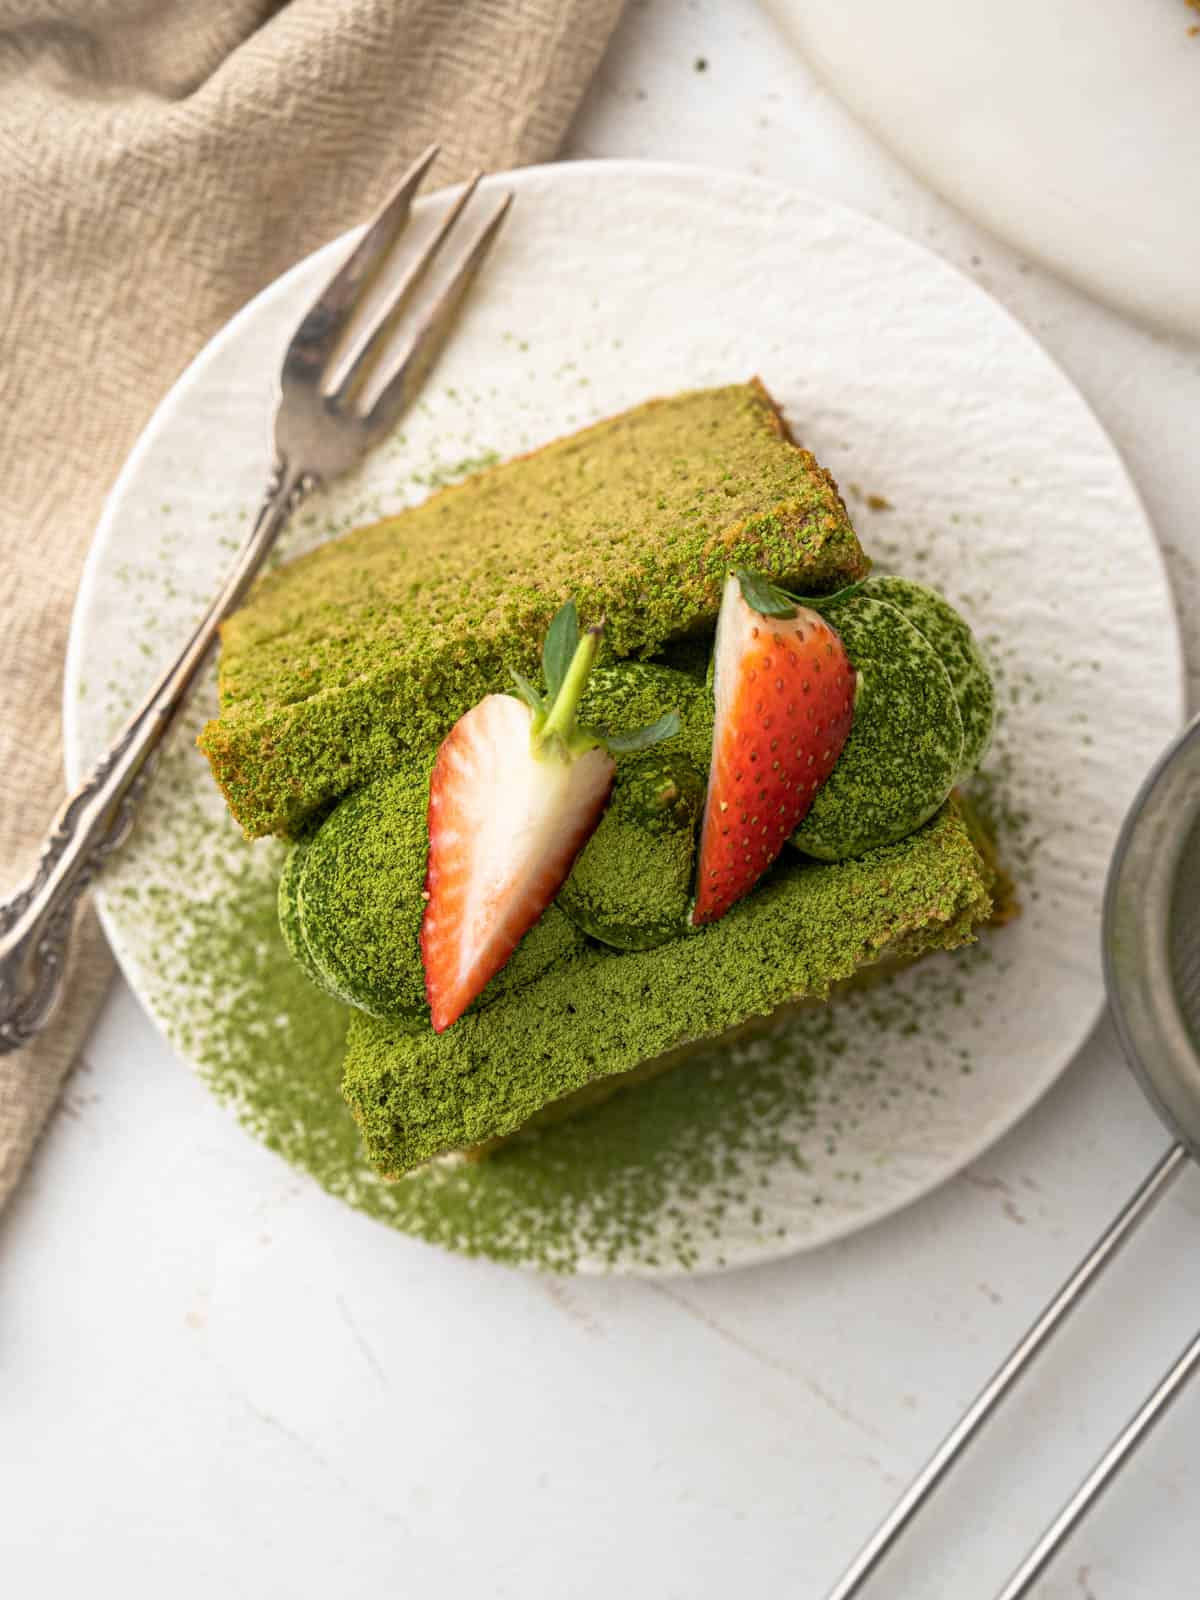 Matcha green tea chiffon sponge cake with whipped cream and strawberries